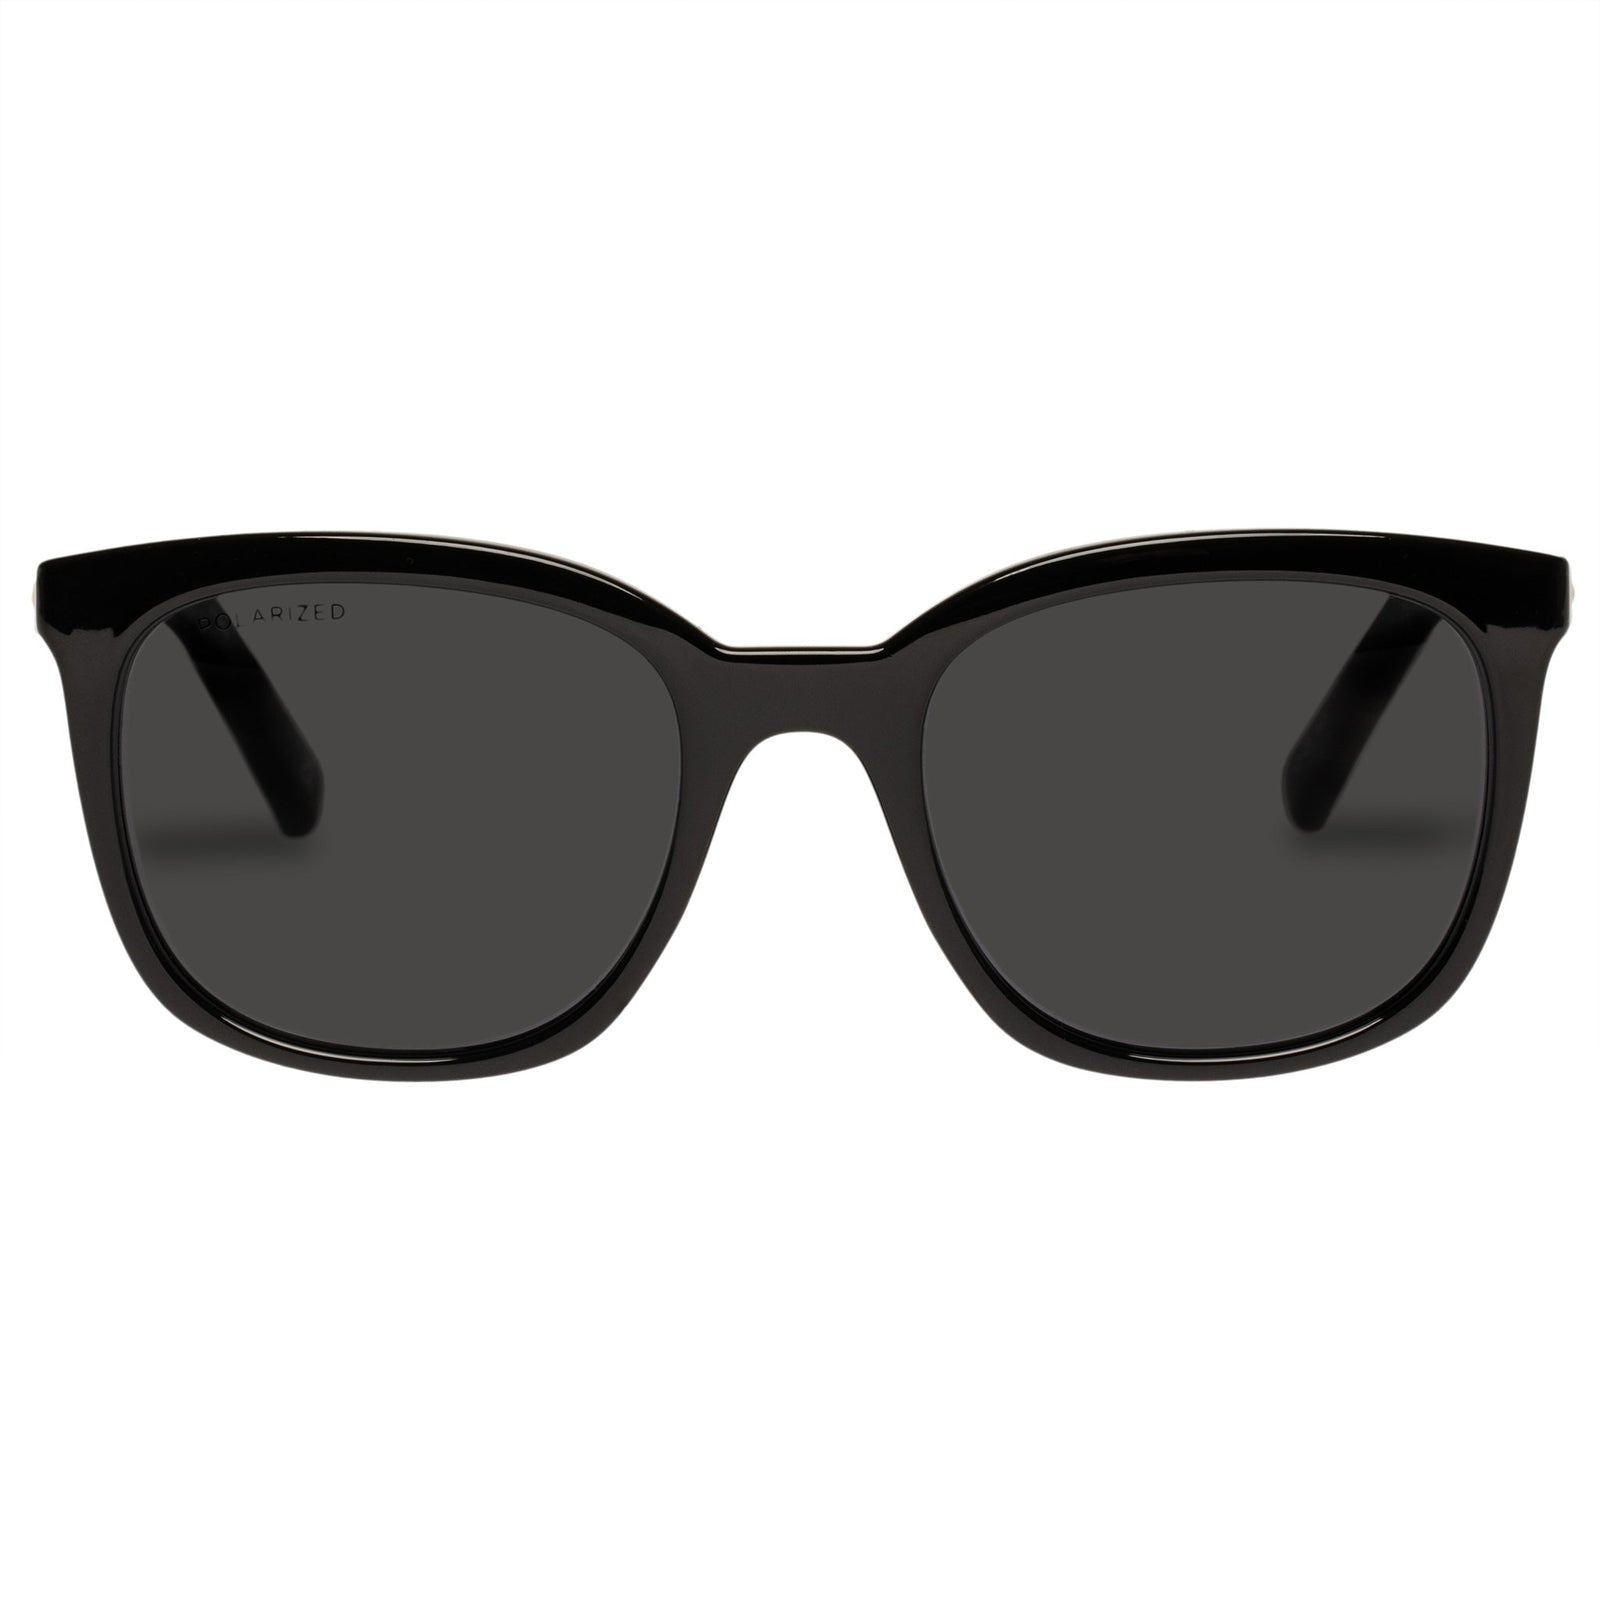 Real Madrid sunglasses 20003A footballer sunglasses – Varionet.com